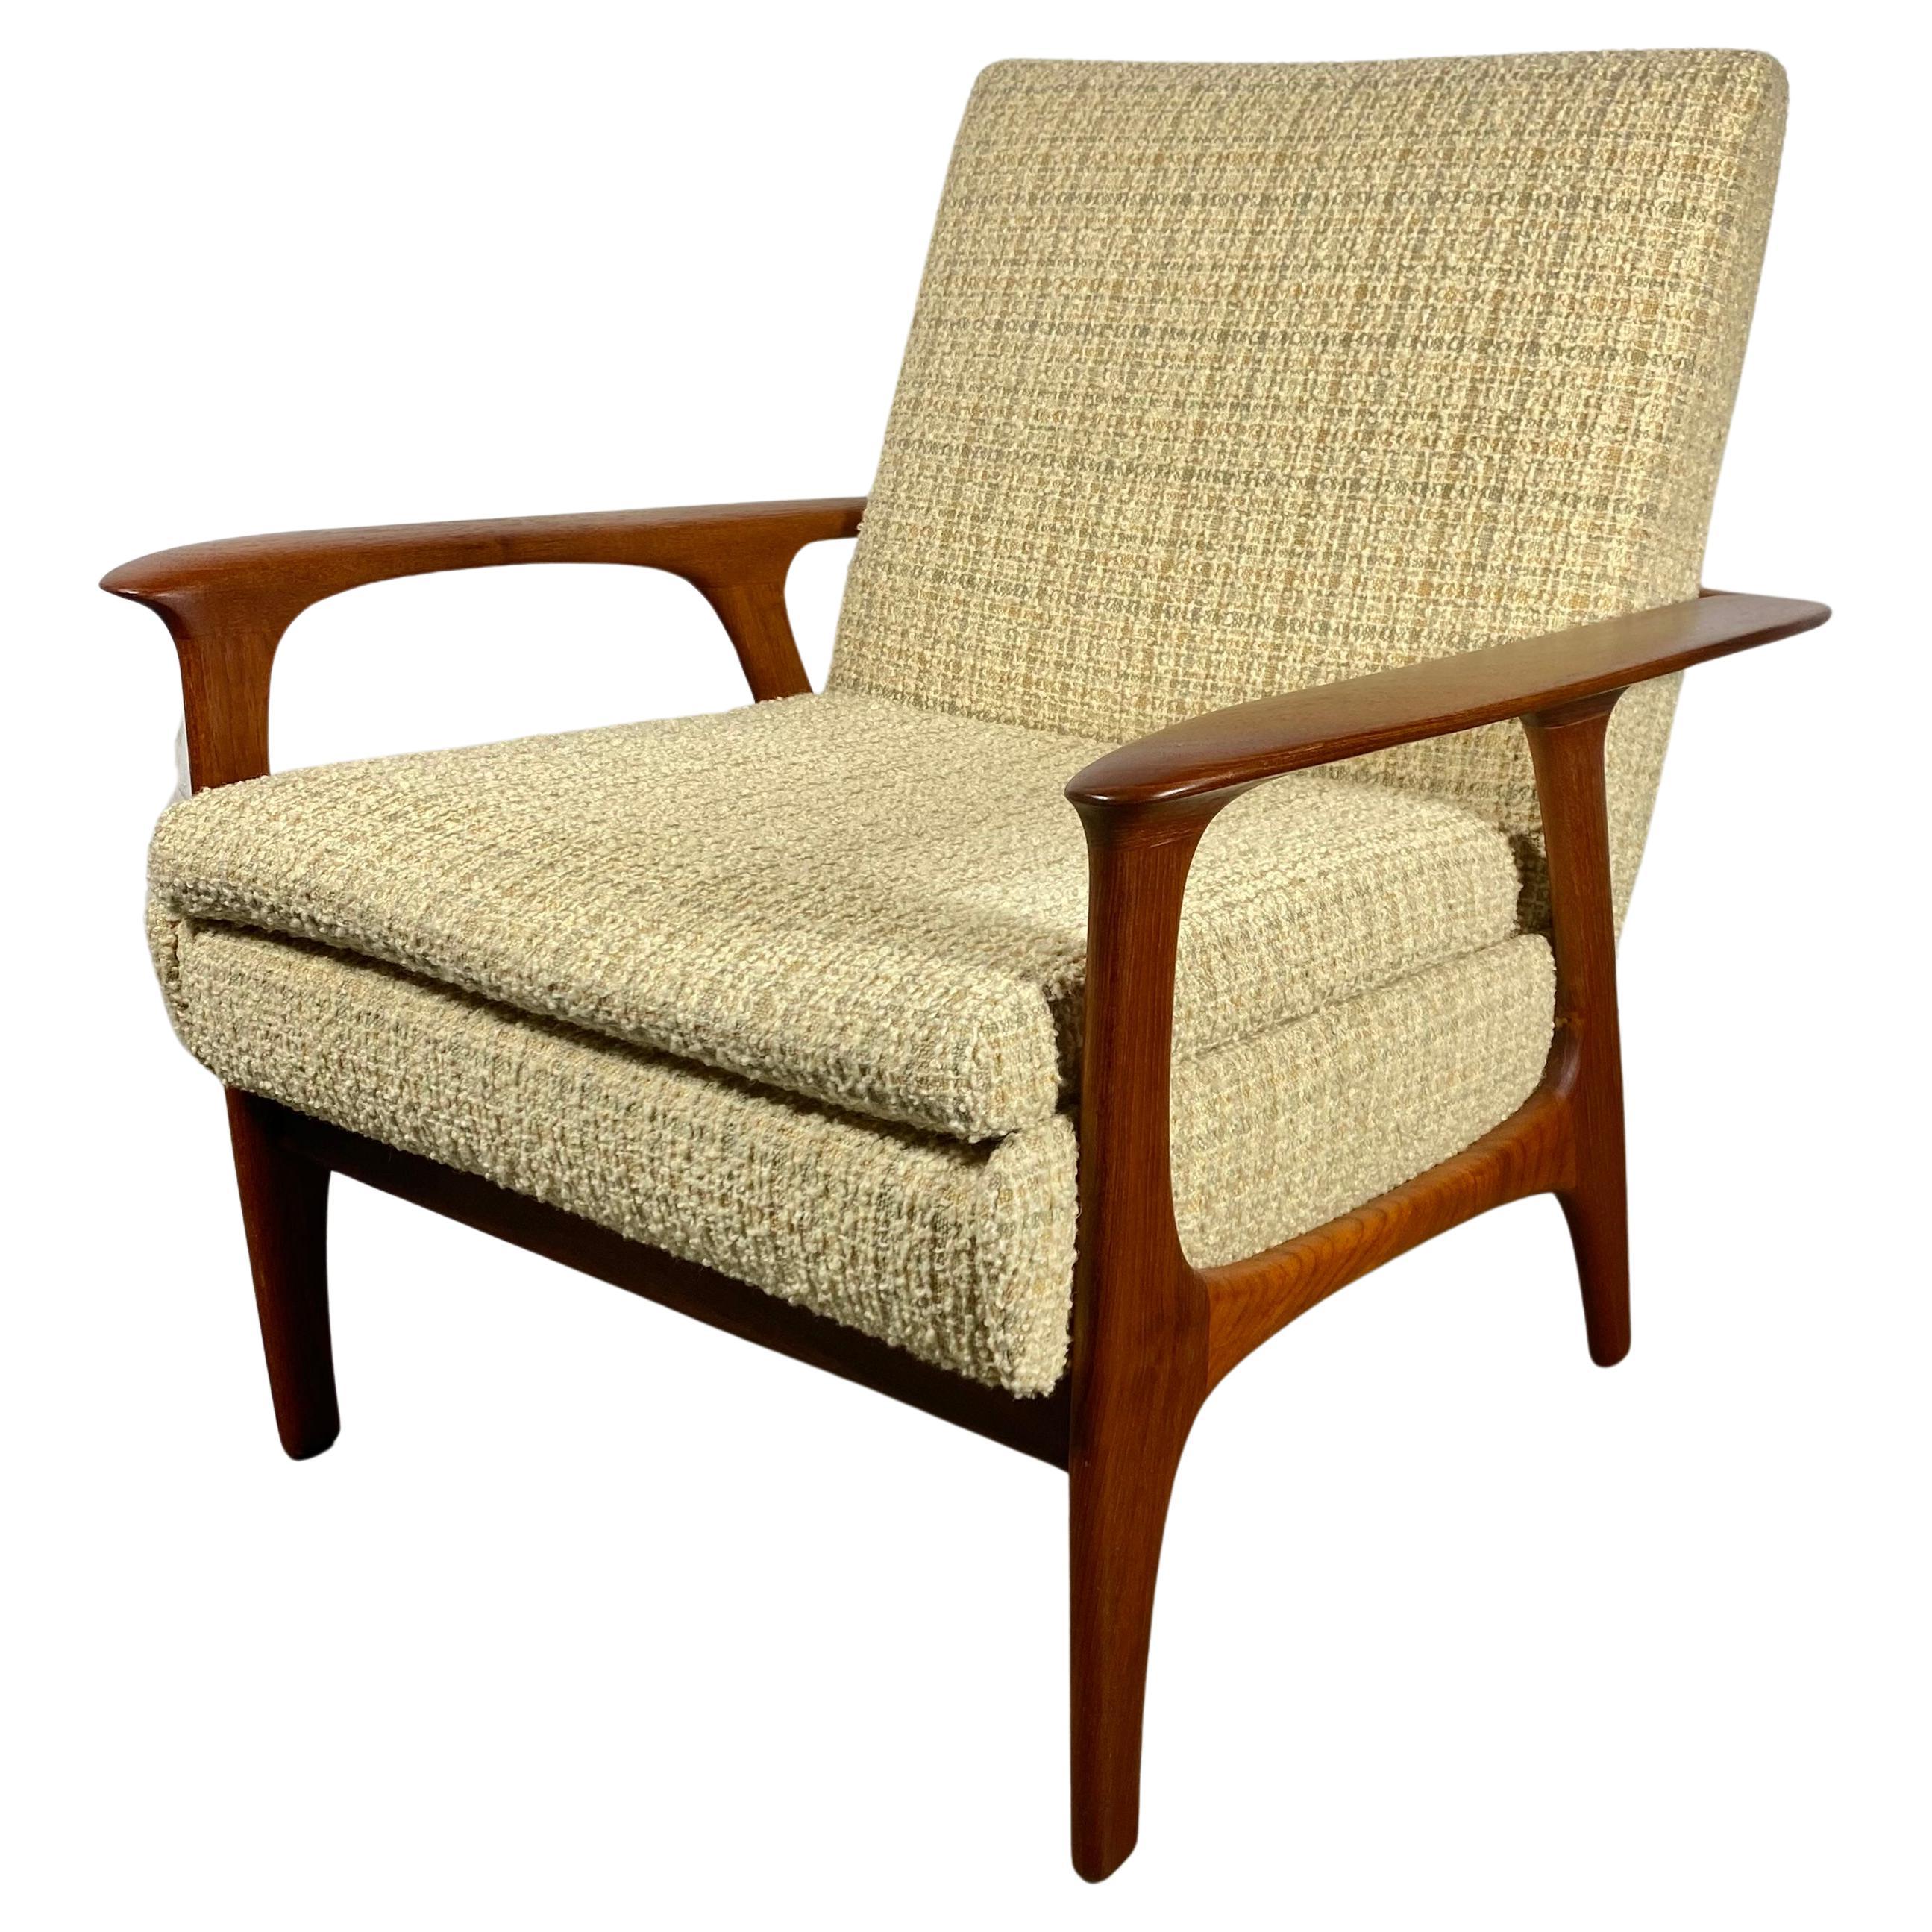 Classic Scandinavian Modern Teak Lounge Chair , manner Of Hans Wegner For Sale